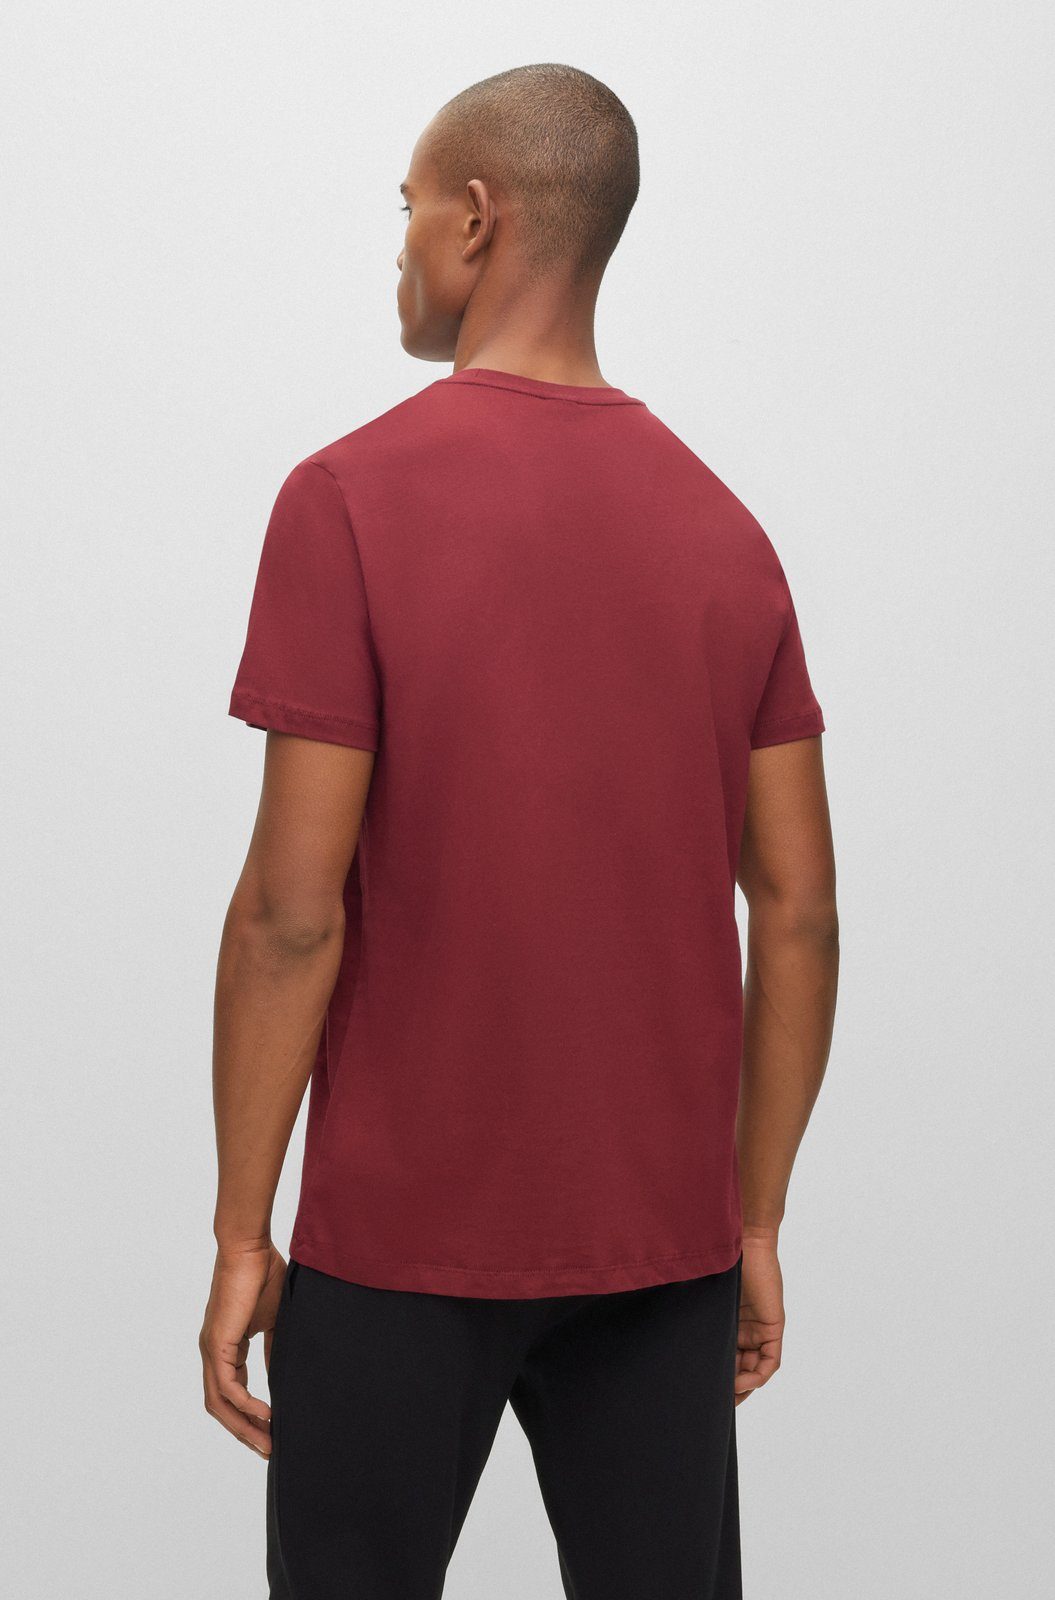 BOSS T-Shirt T-Shirt RN 24 602 dark red mit Markenprint